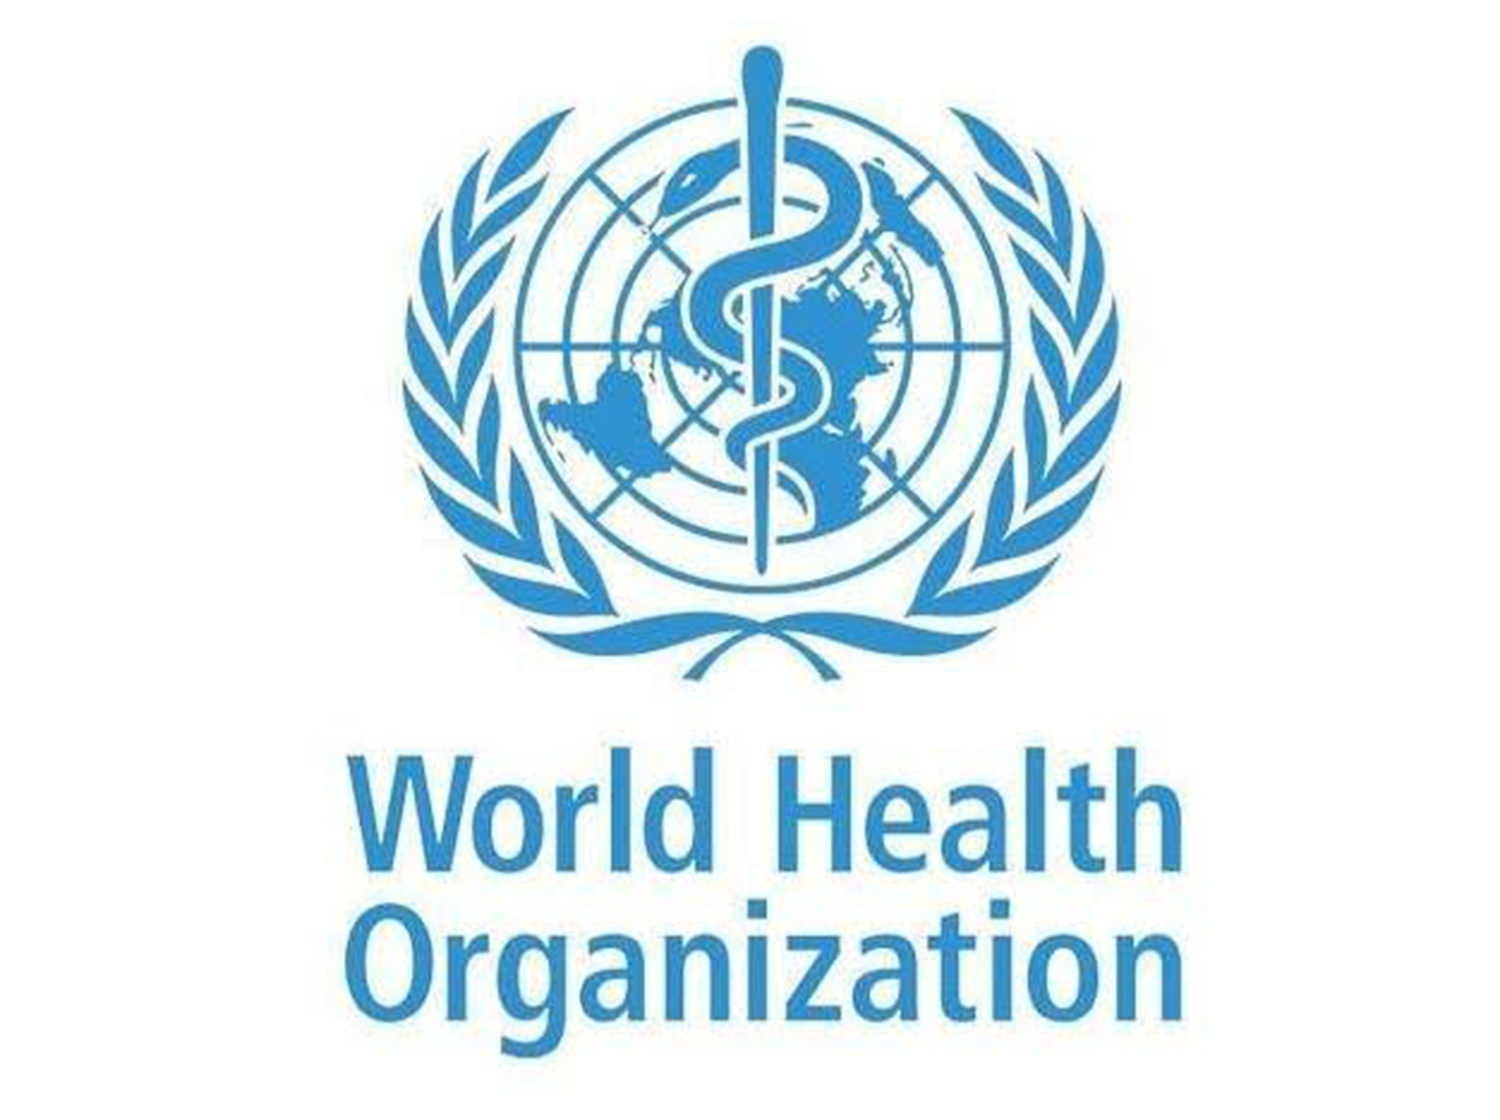 World health organization pfm client